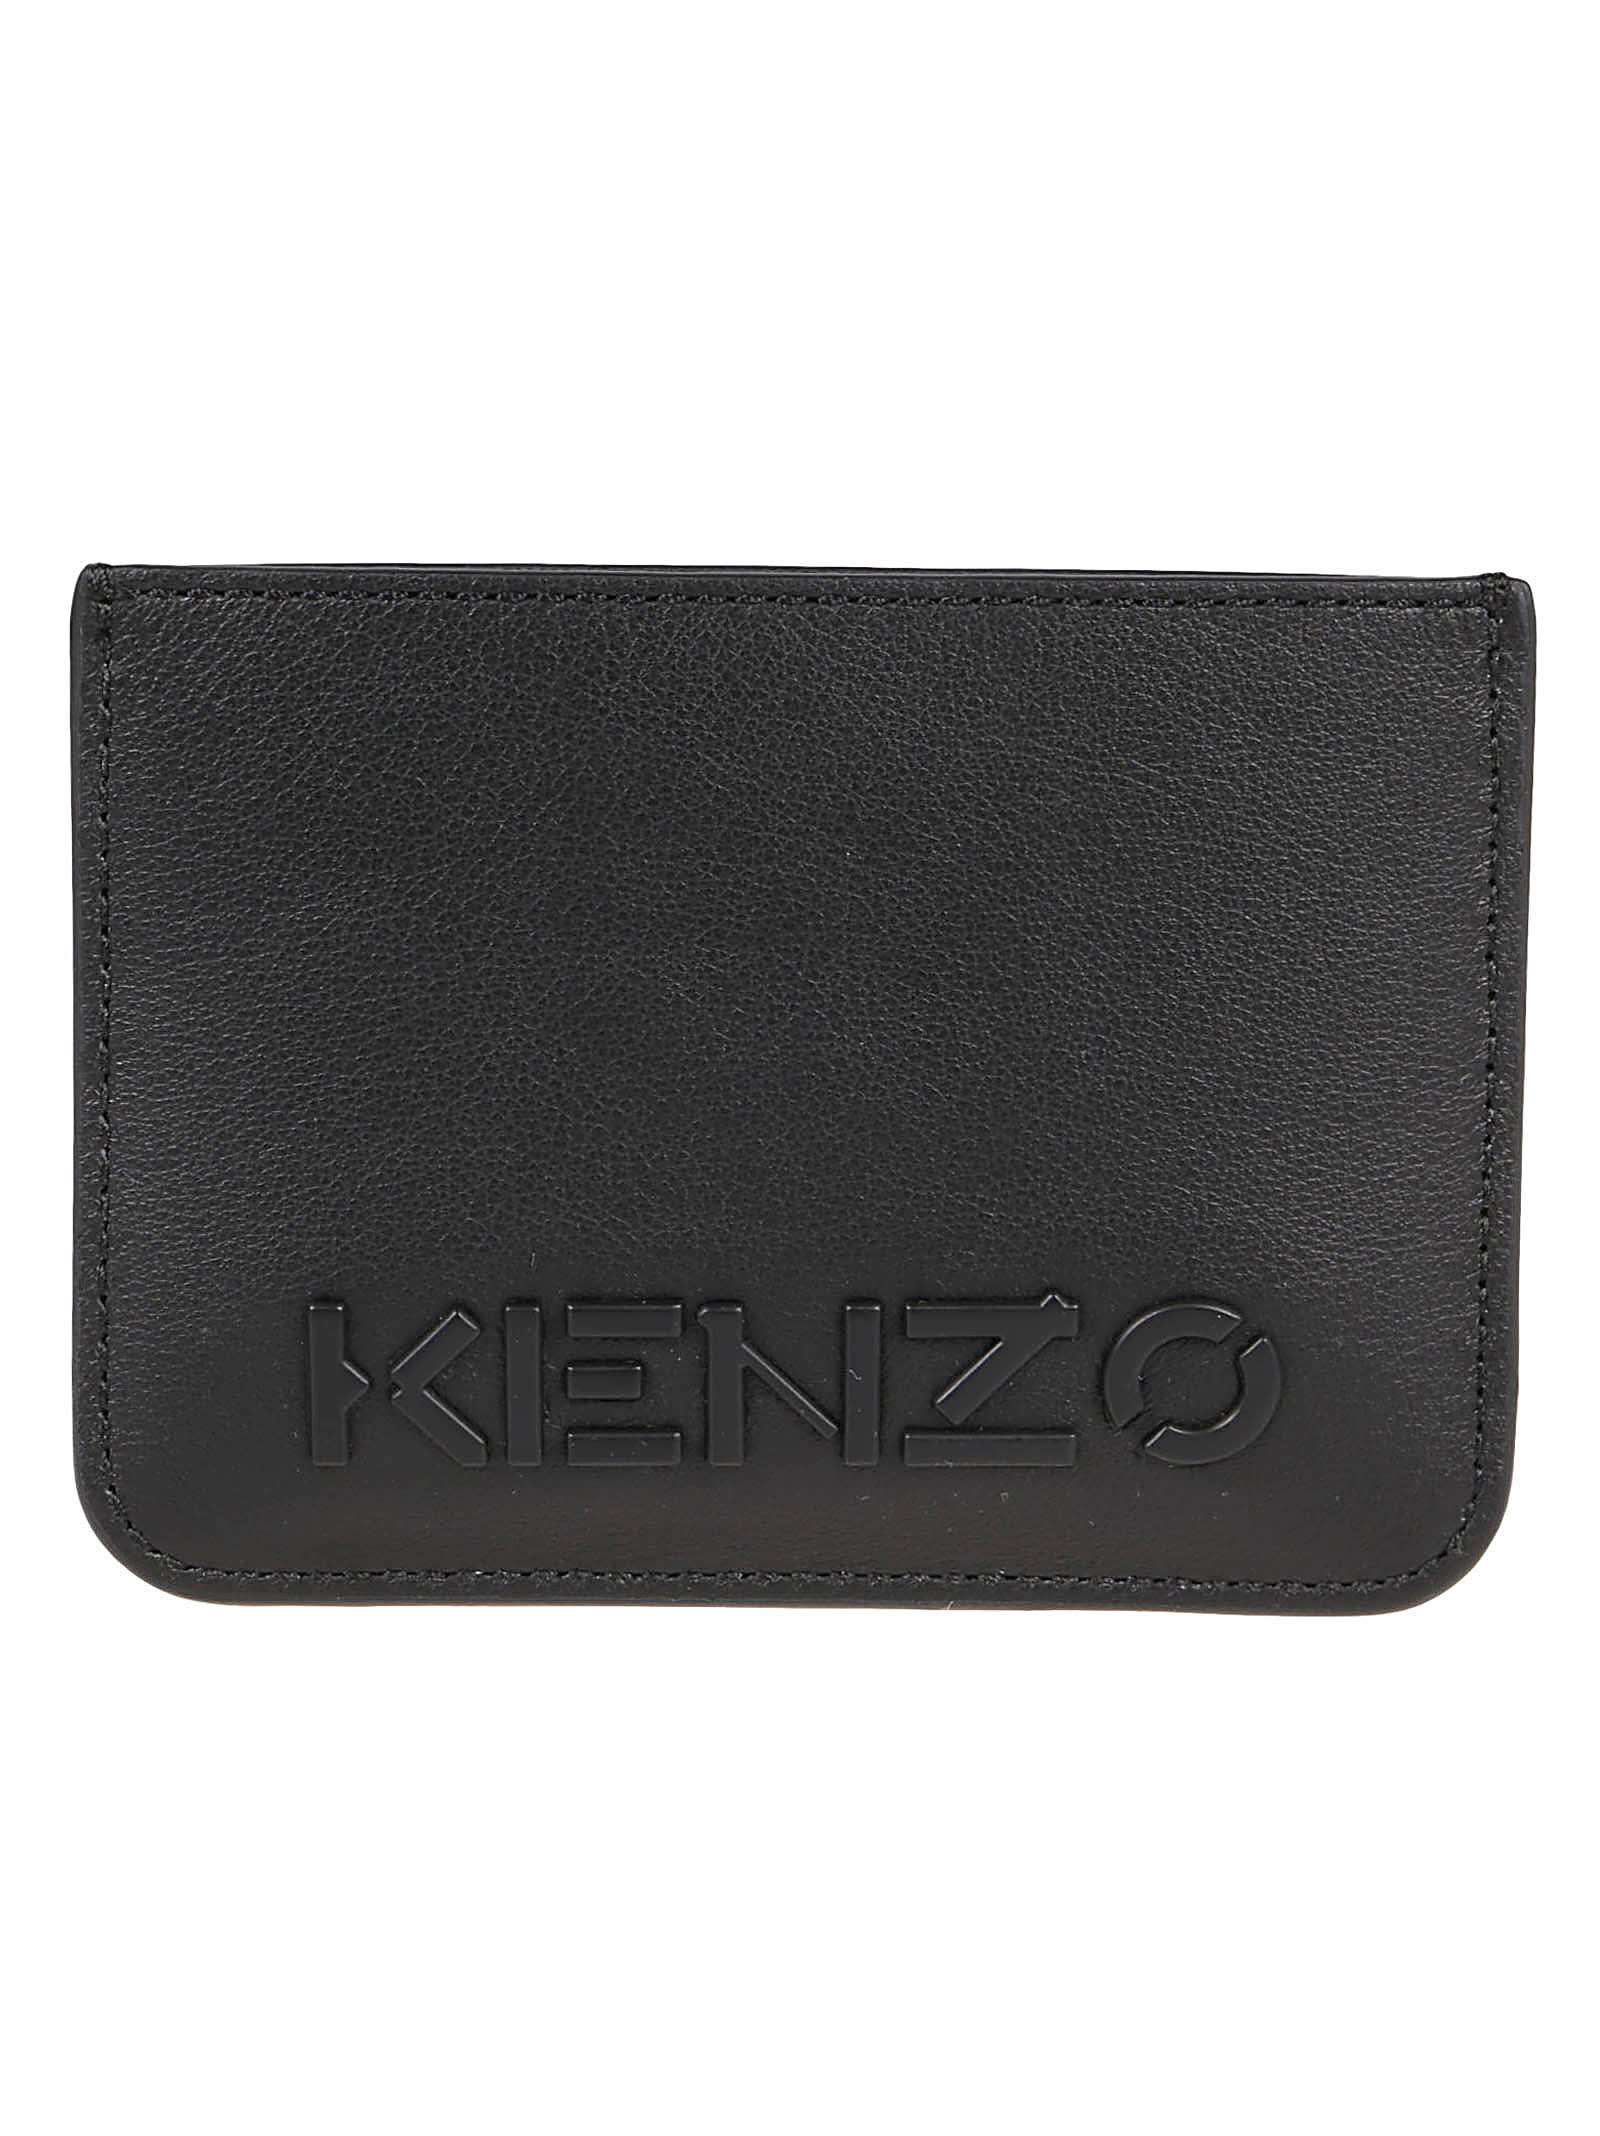 Kenzo Credit Card Holder